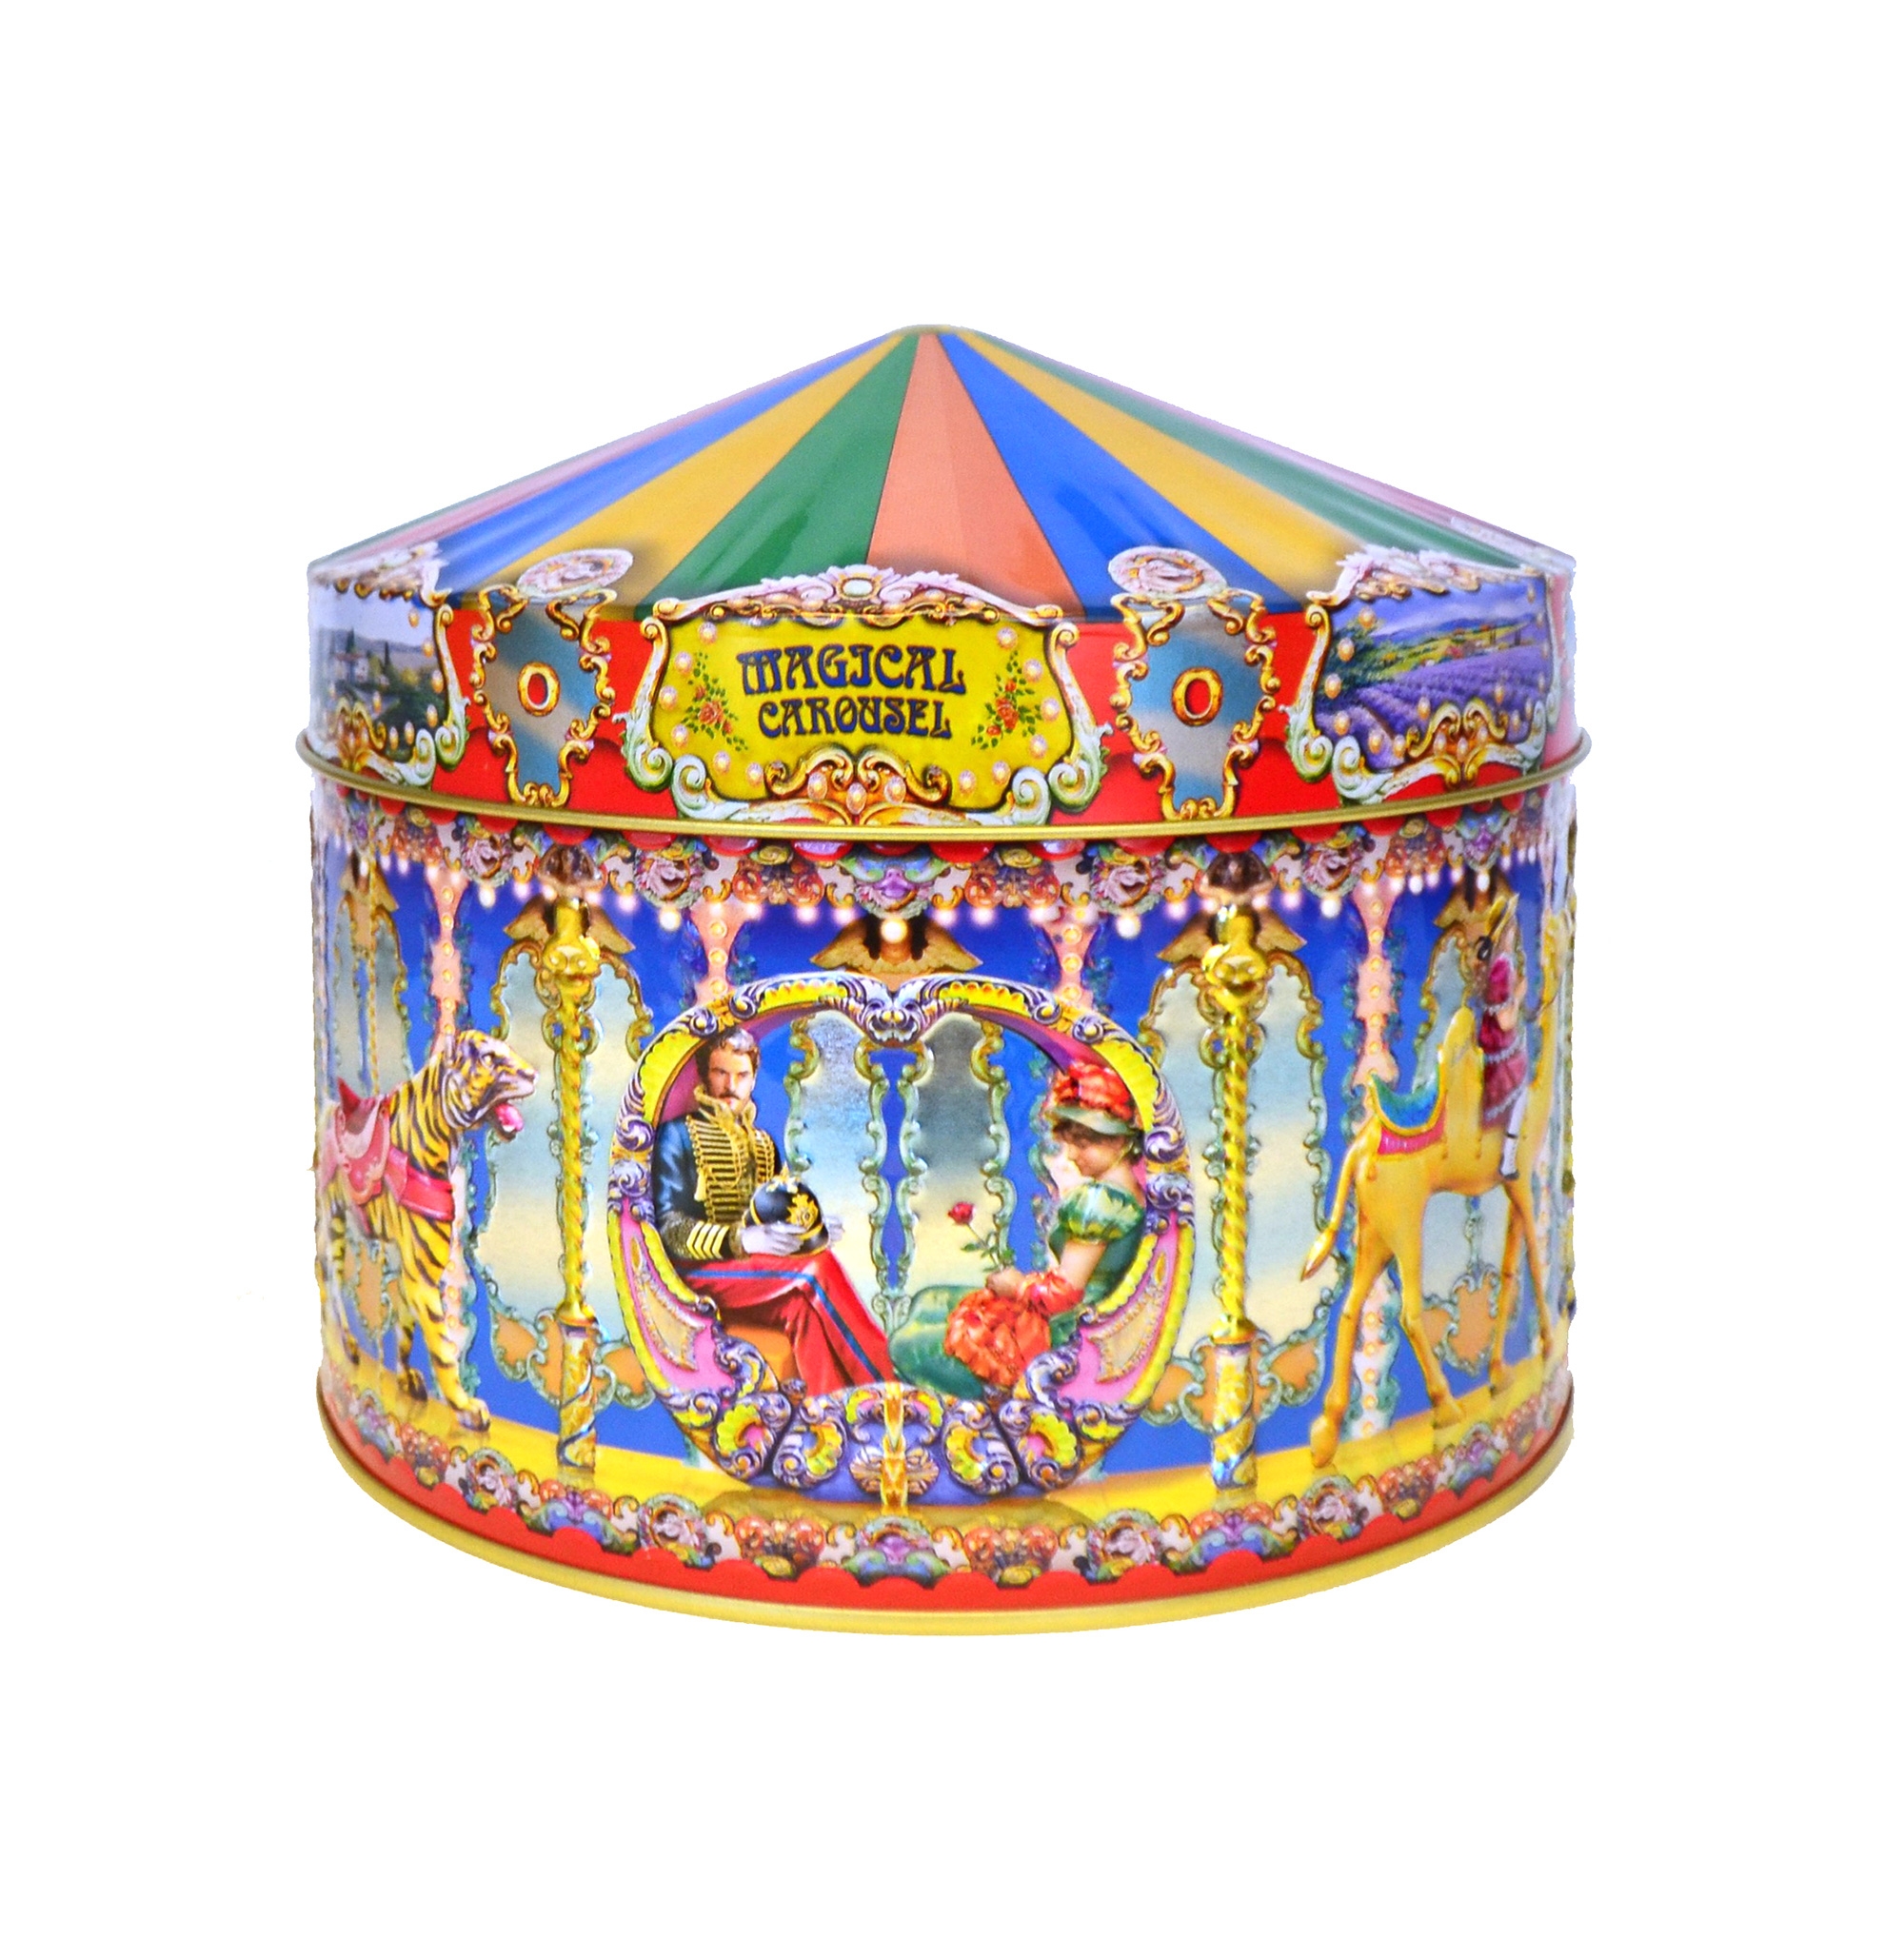 Magical Carousel – 400g Vanilla Fudge & English Toffee – Churchills Confectionary